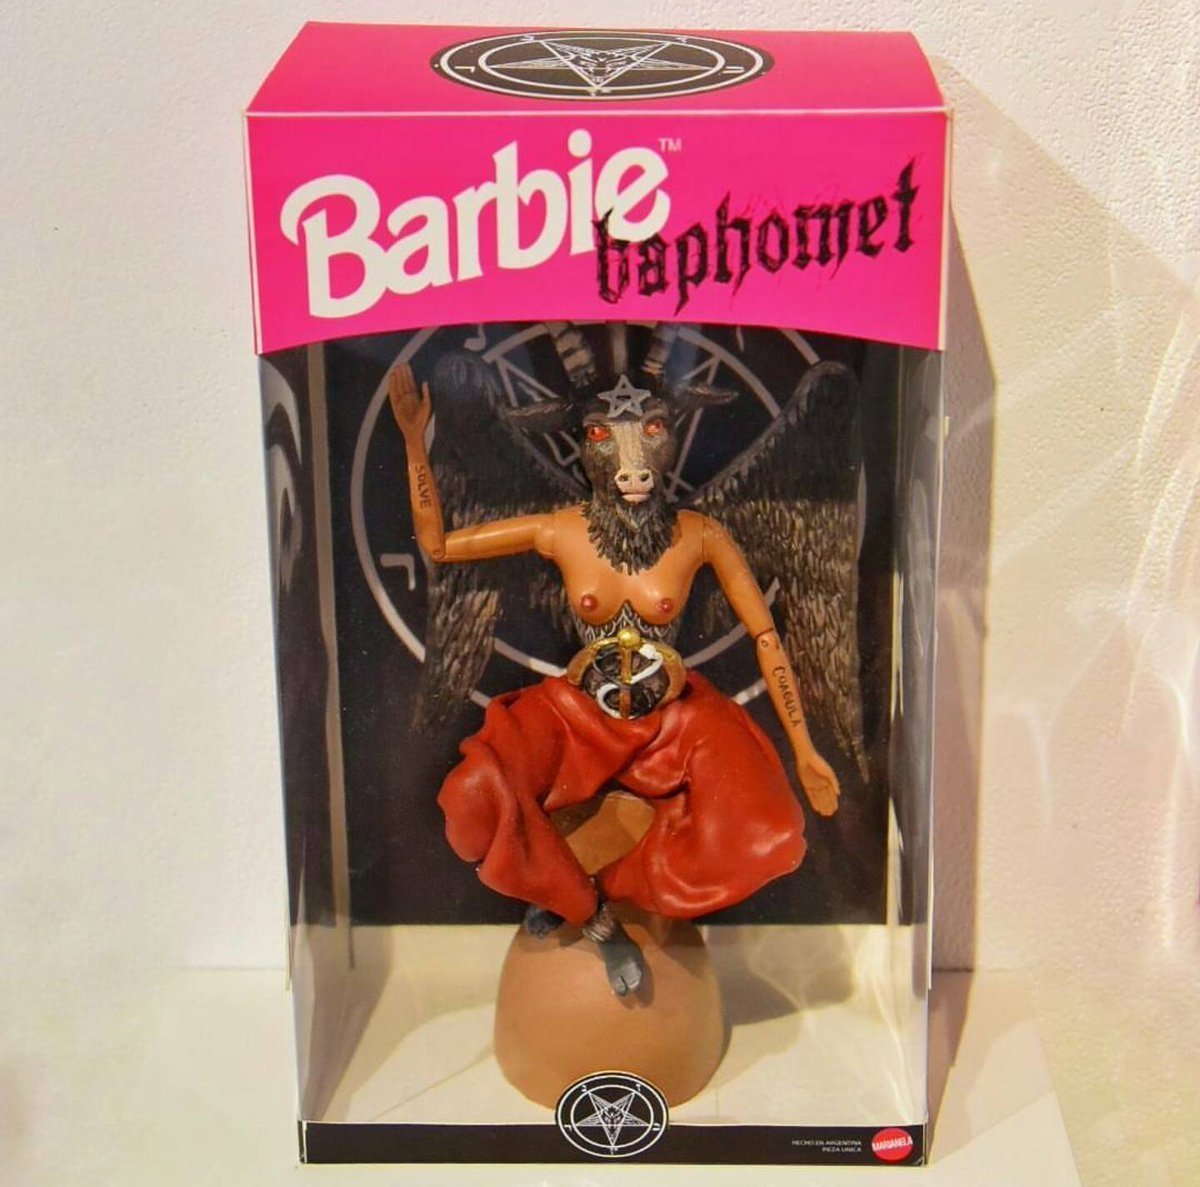 Satanic barbie